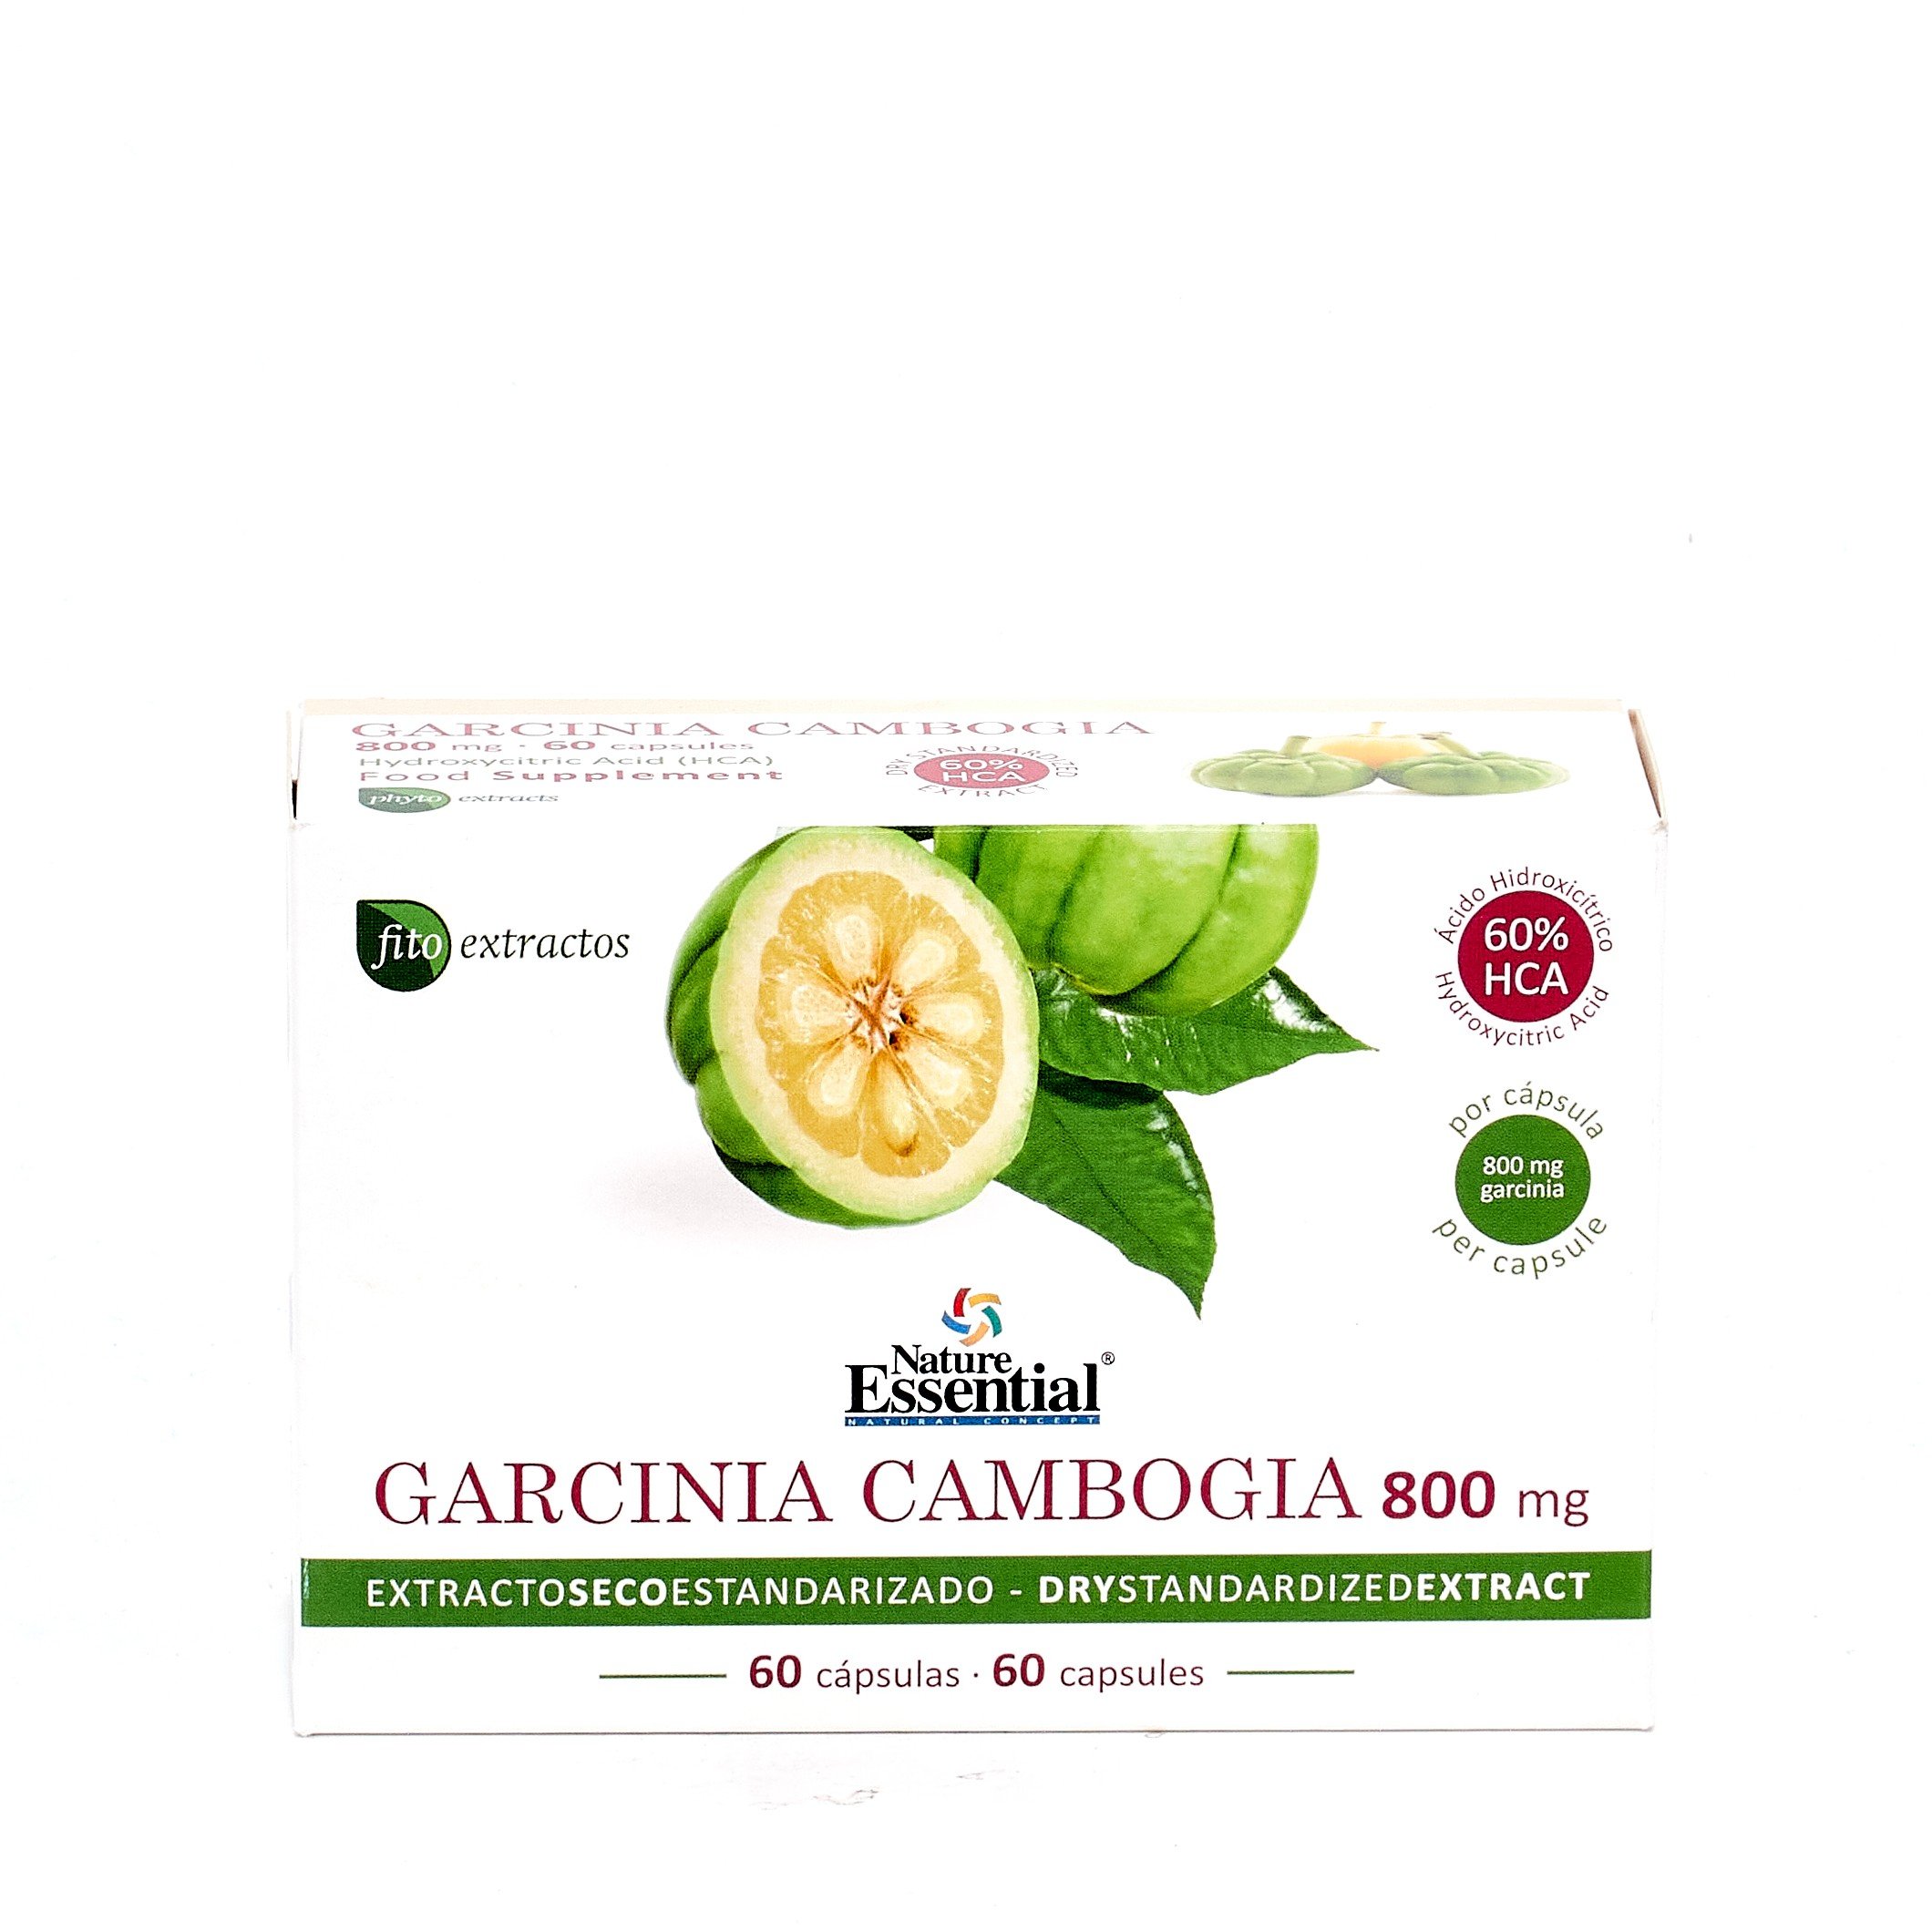 Nature Essential Garcinia Cambogia 800mg, 60 cápsulas.